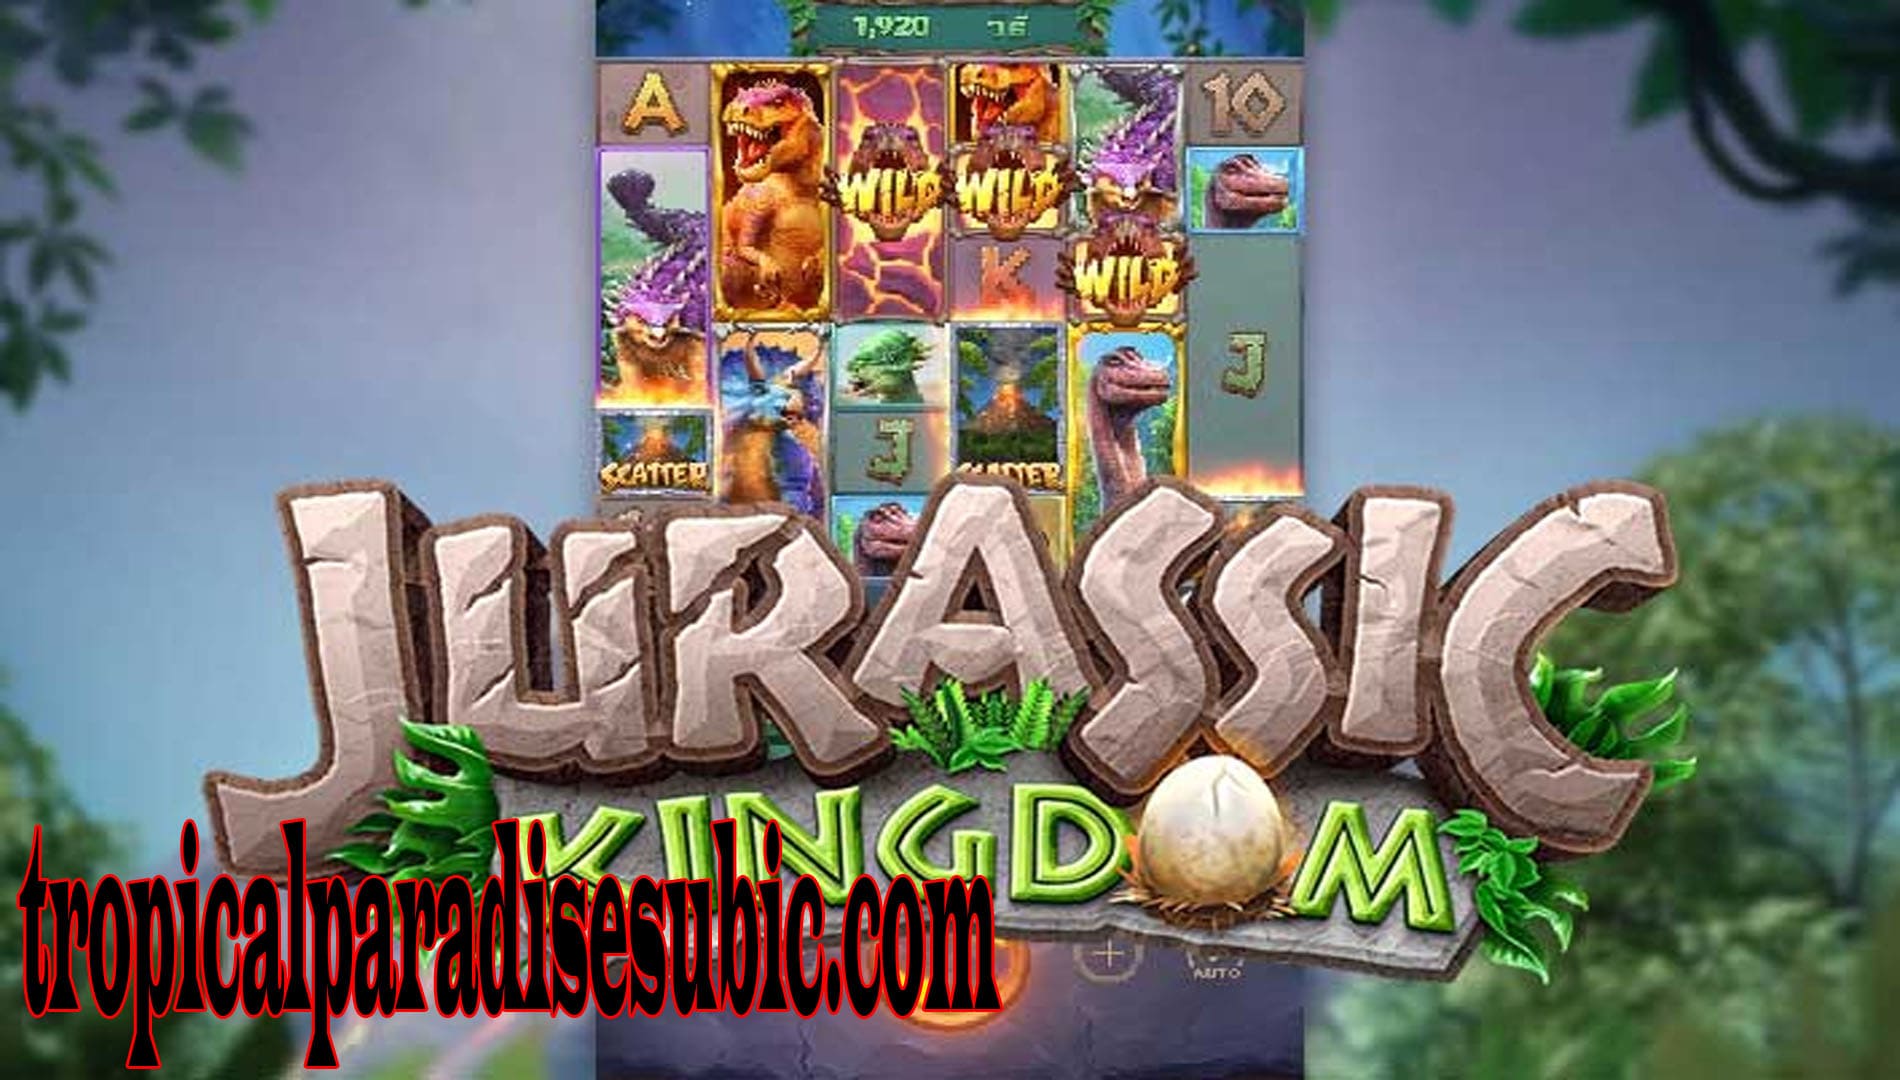 Slot Jurassic Kingdom